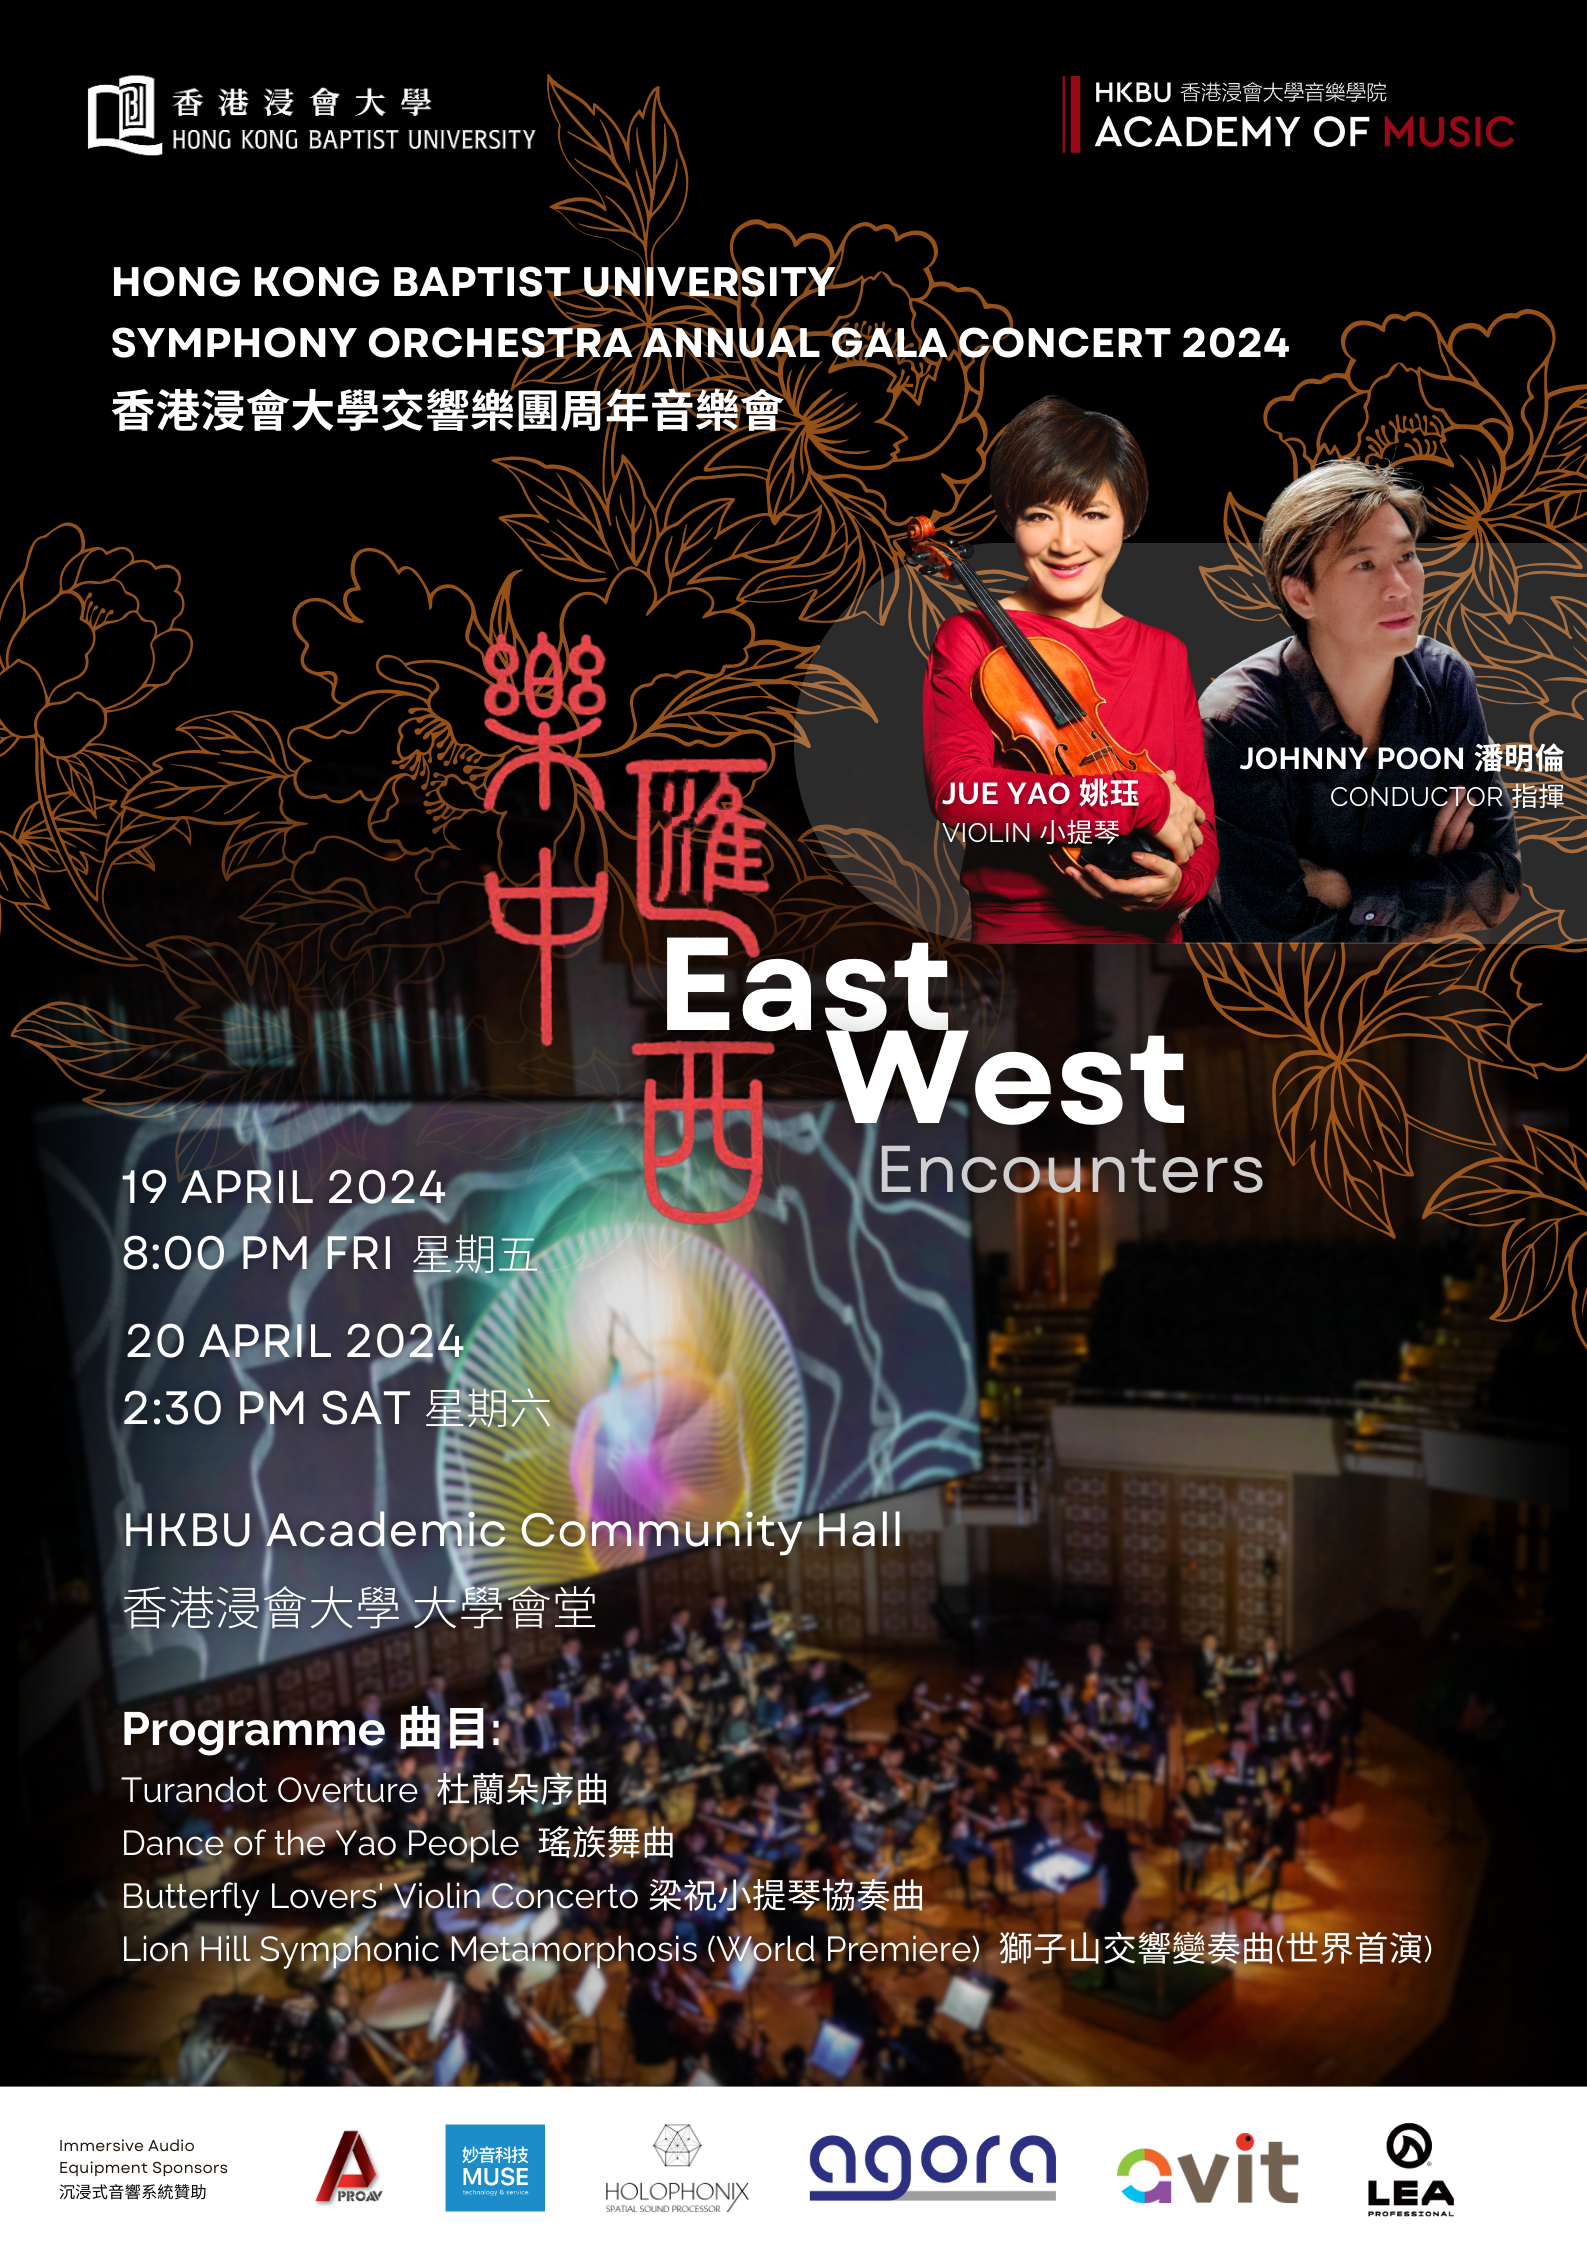 HKBU Symphony Orchestra Annual Gala Concert 2024